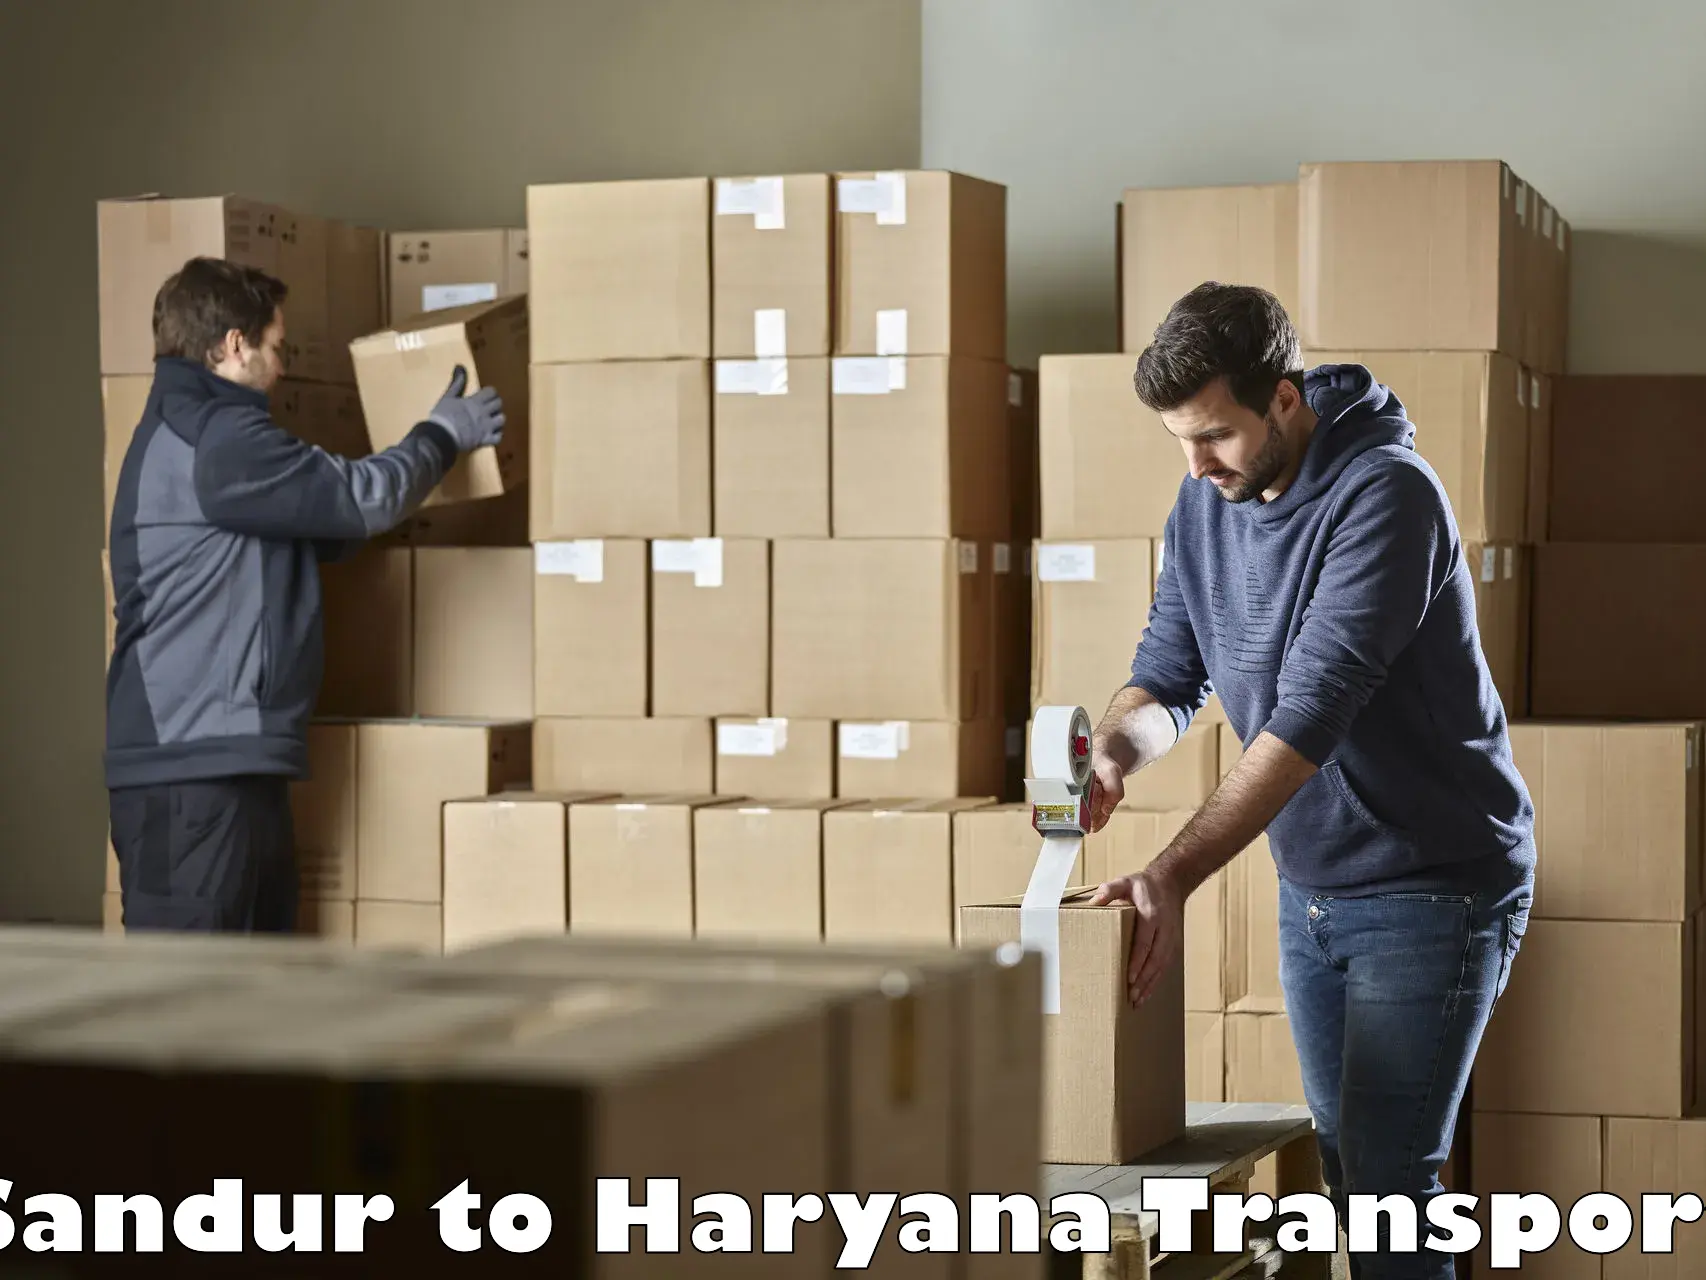 Truck transport companies in India Sandur to Gurgaon